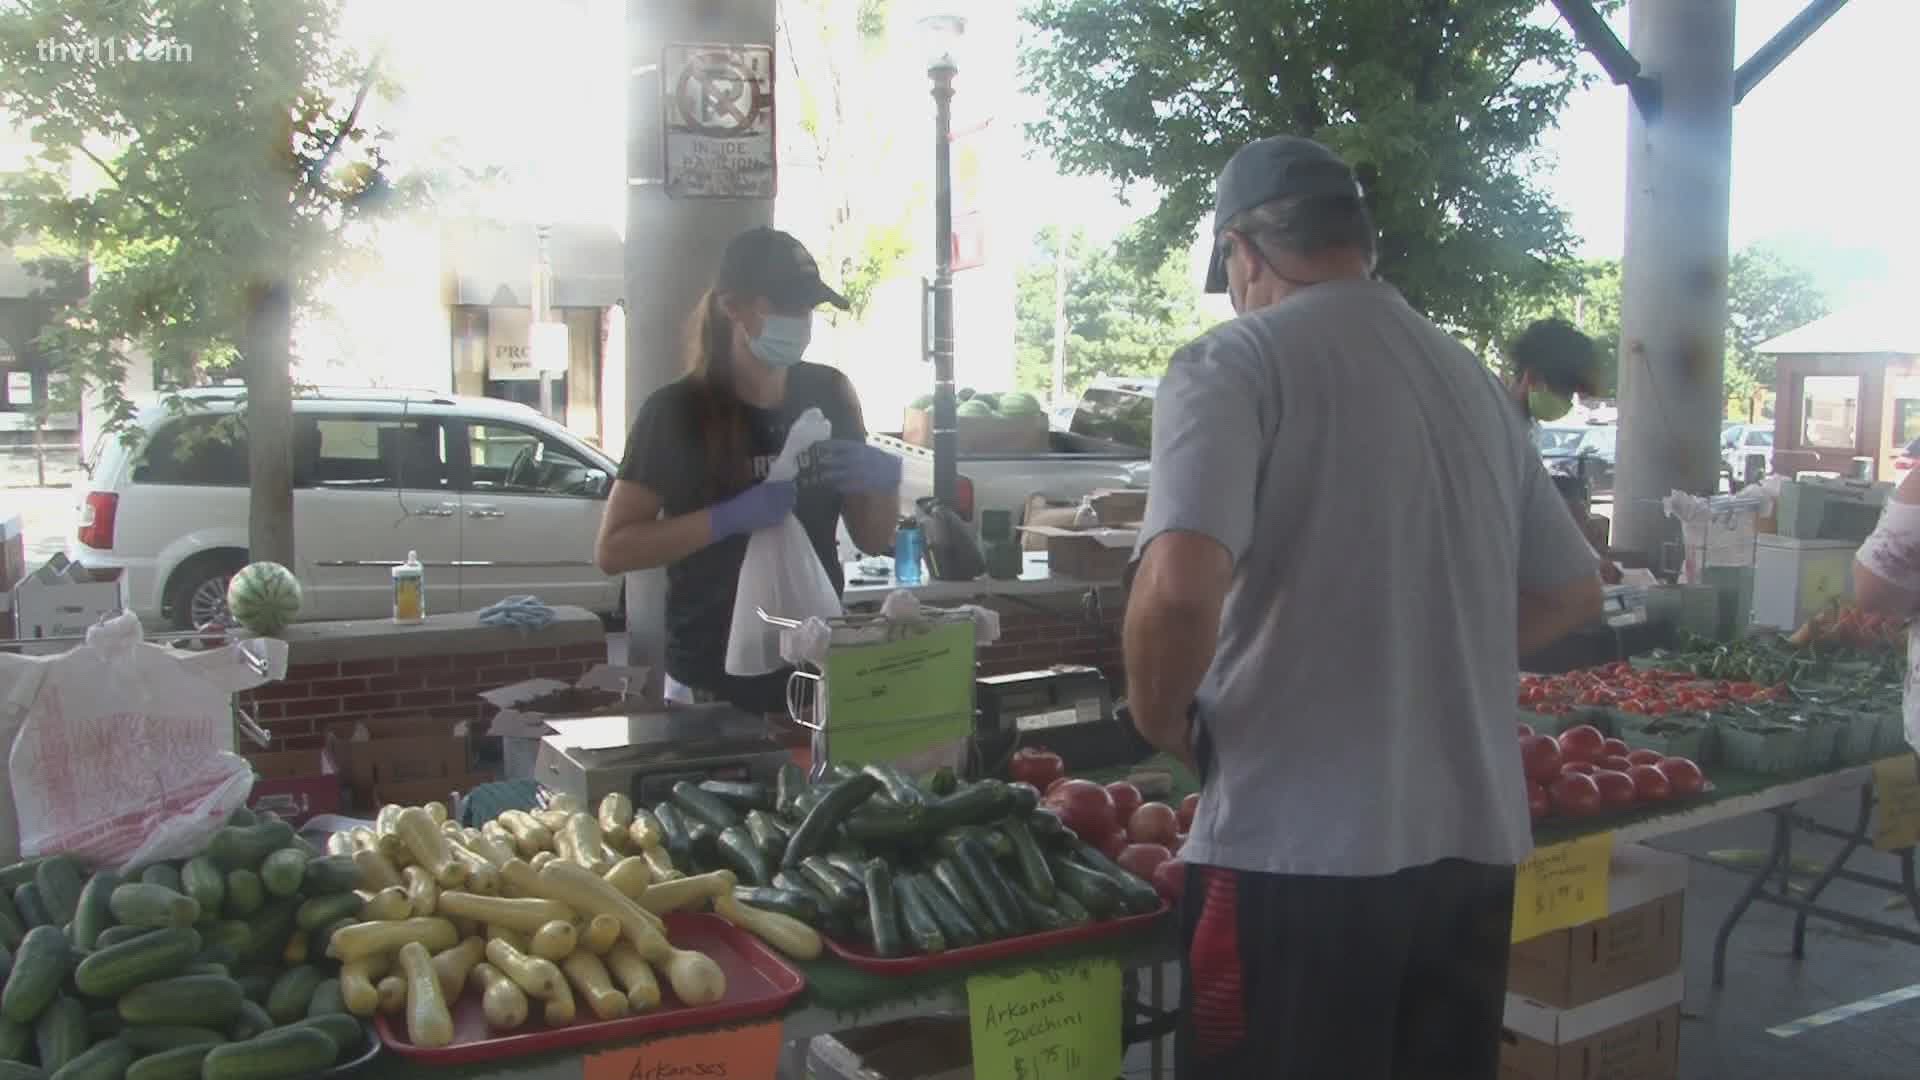 The Little Rock Farmer's Market is back at the River Market Pavilion.